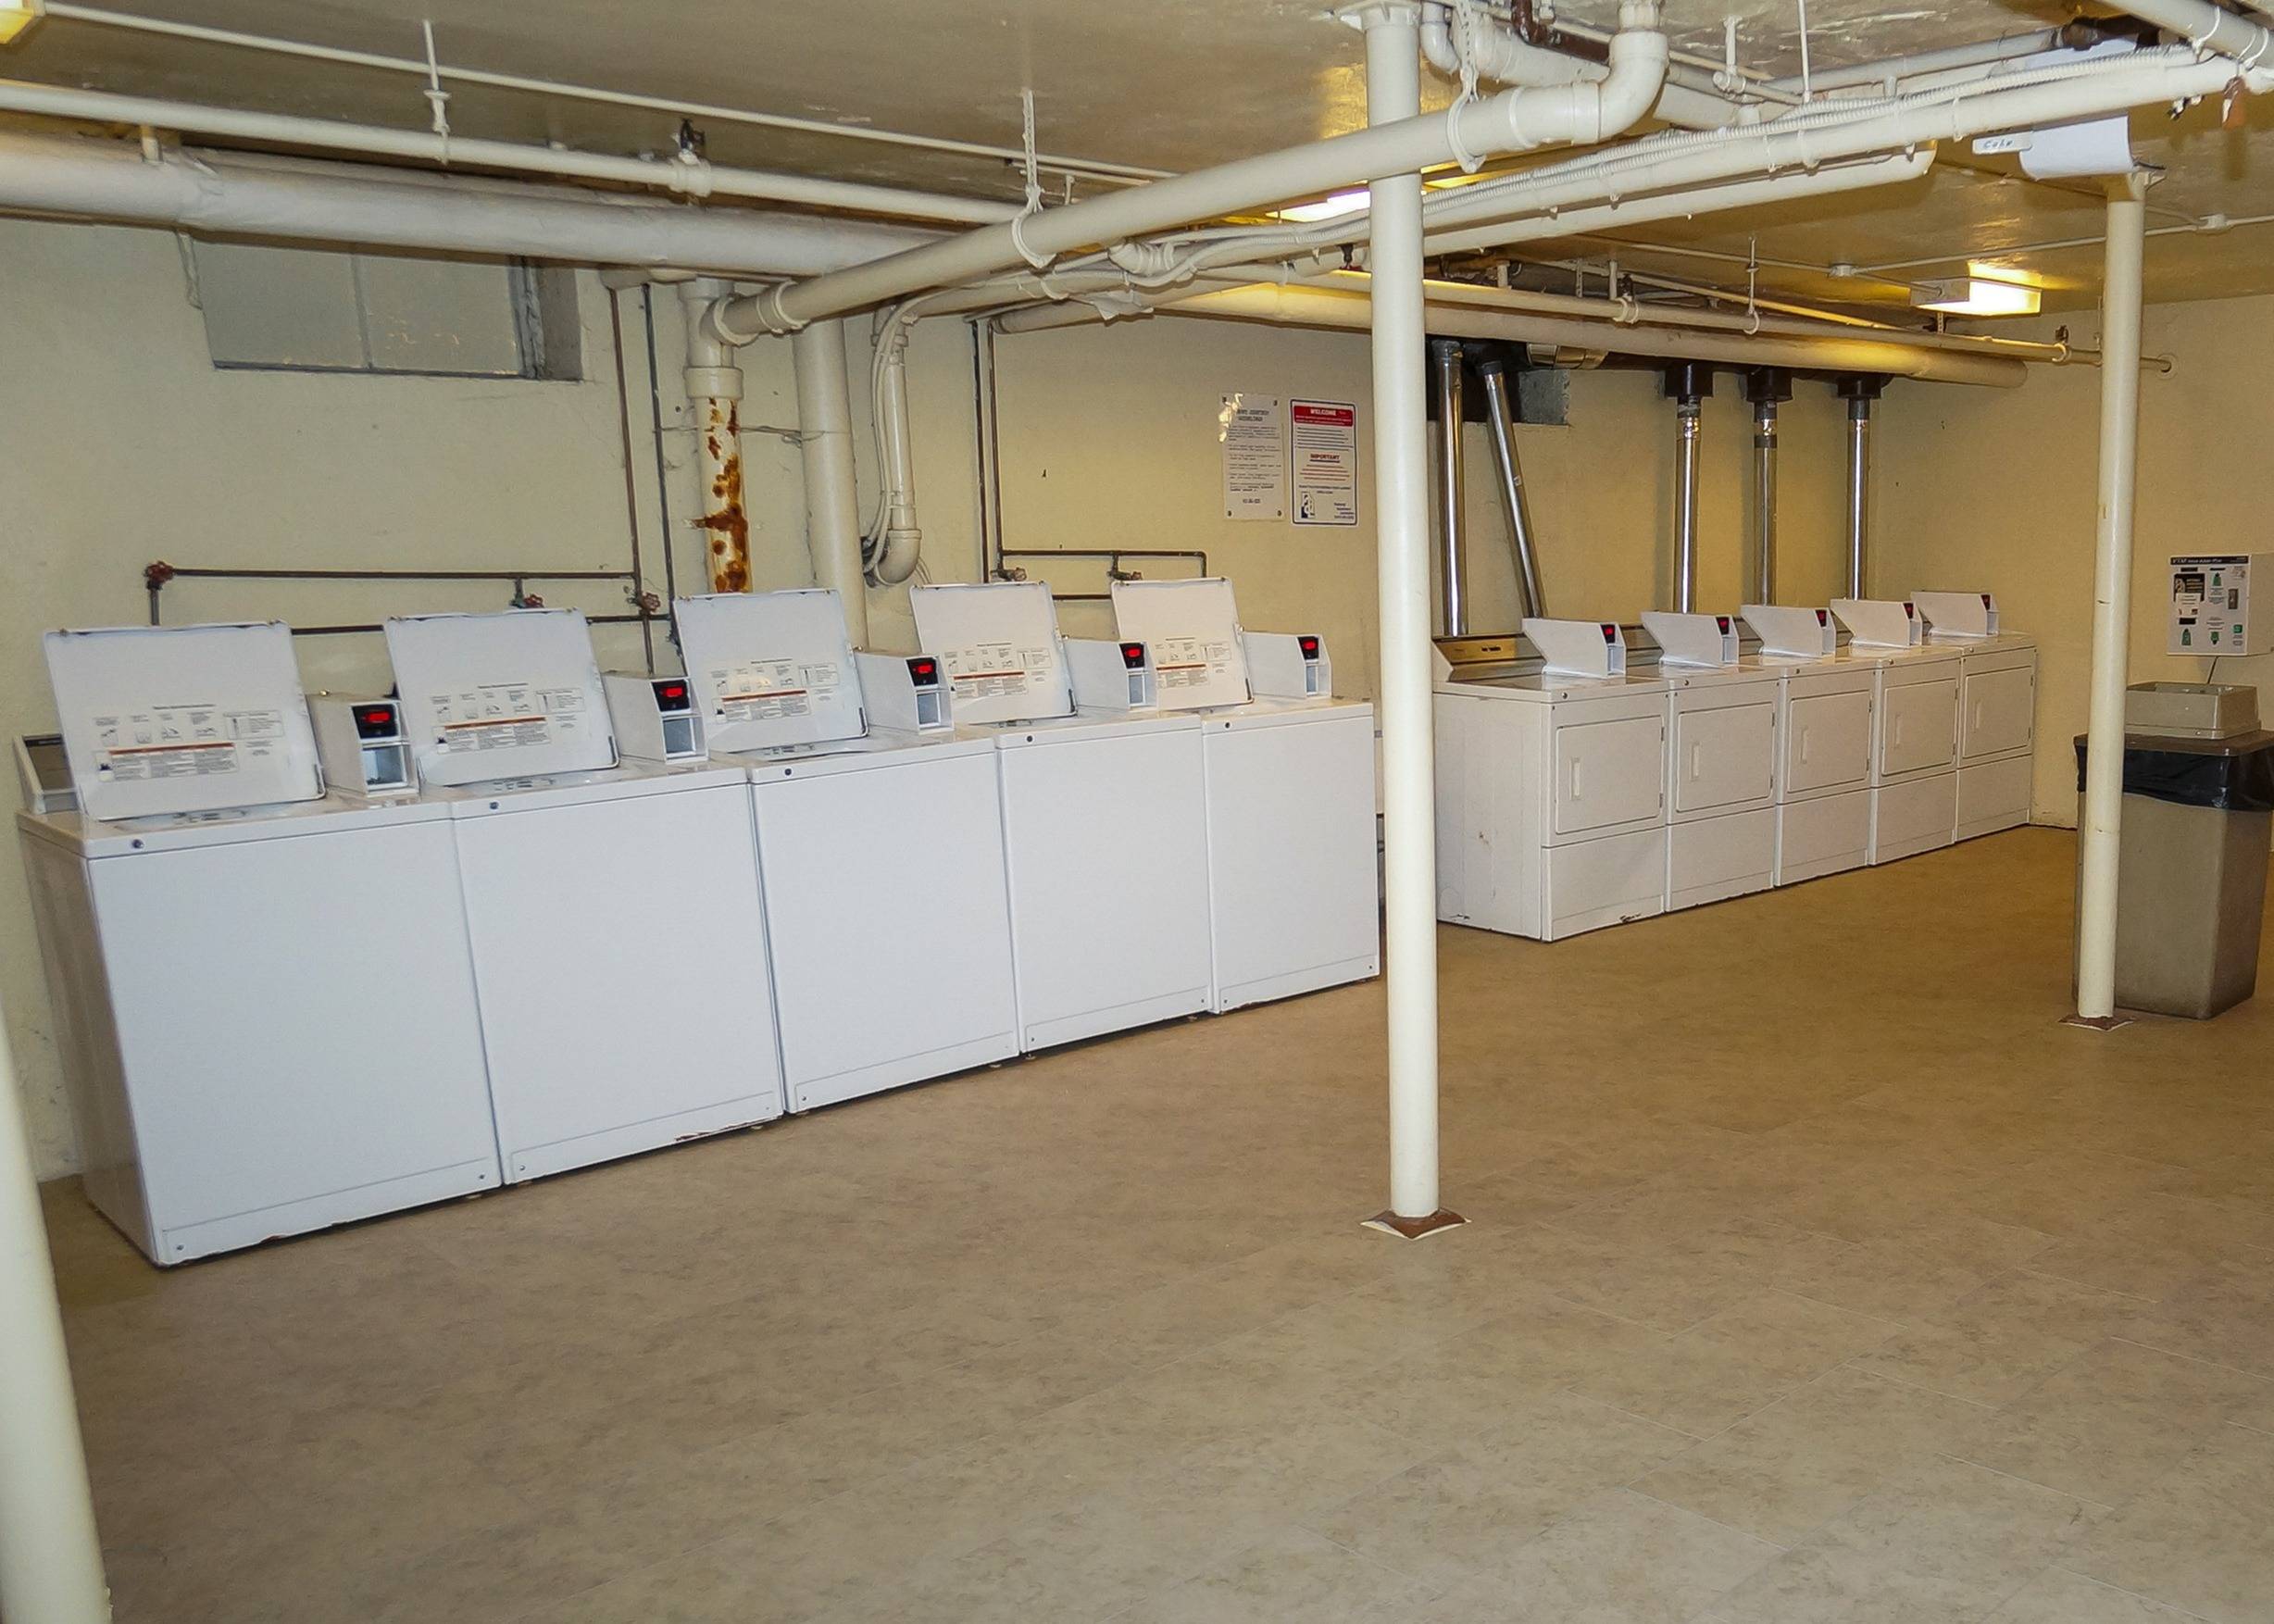 Laundry facilities at the Georgian Building.